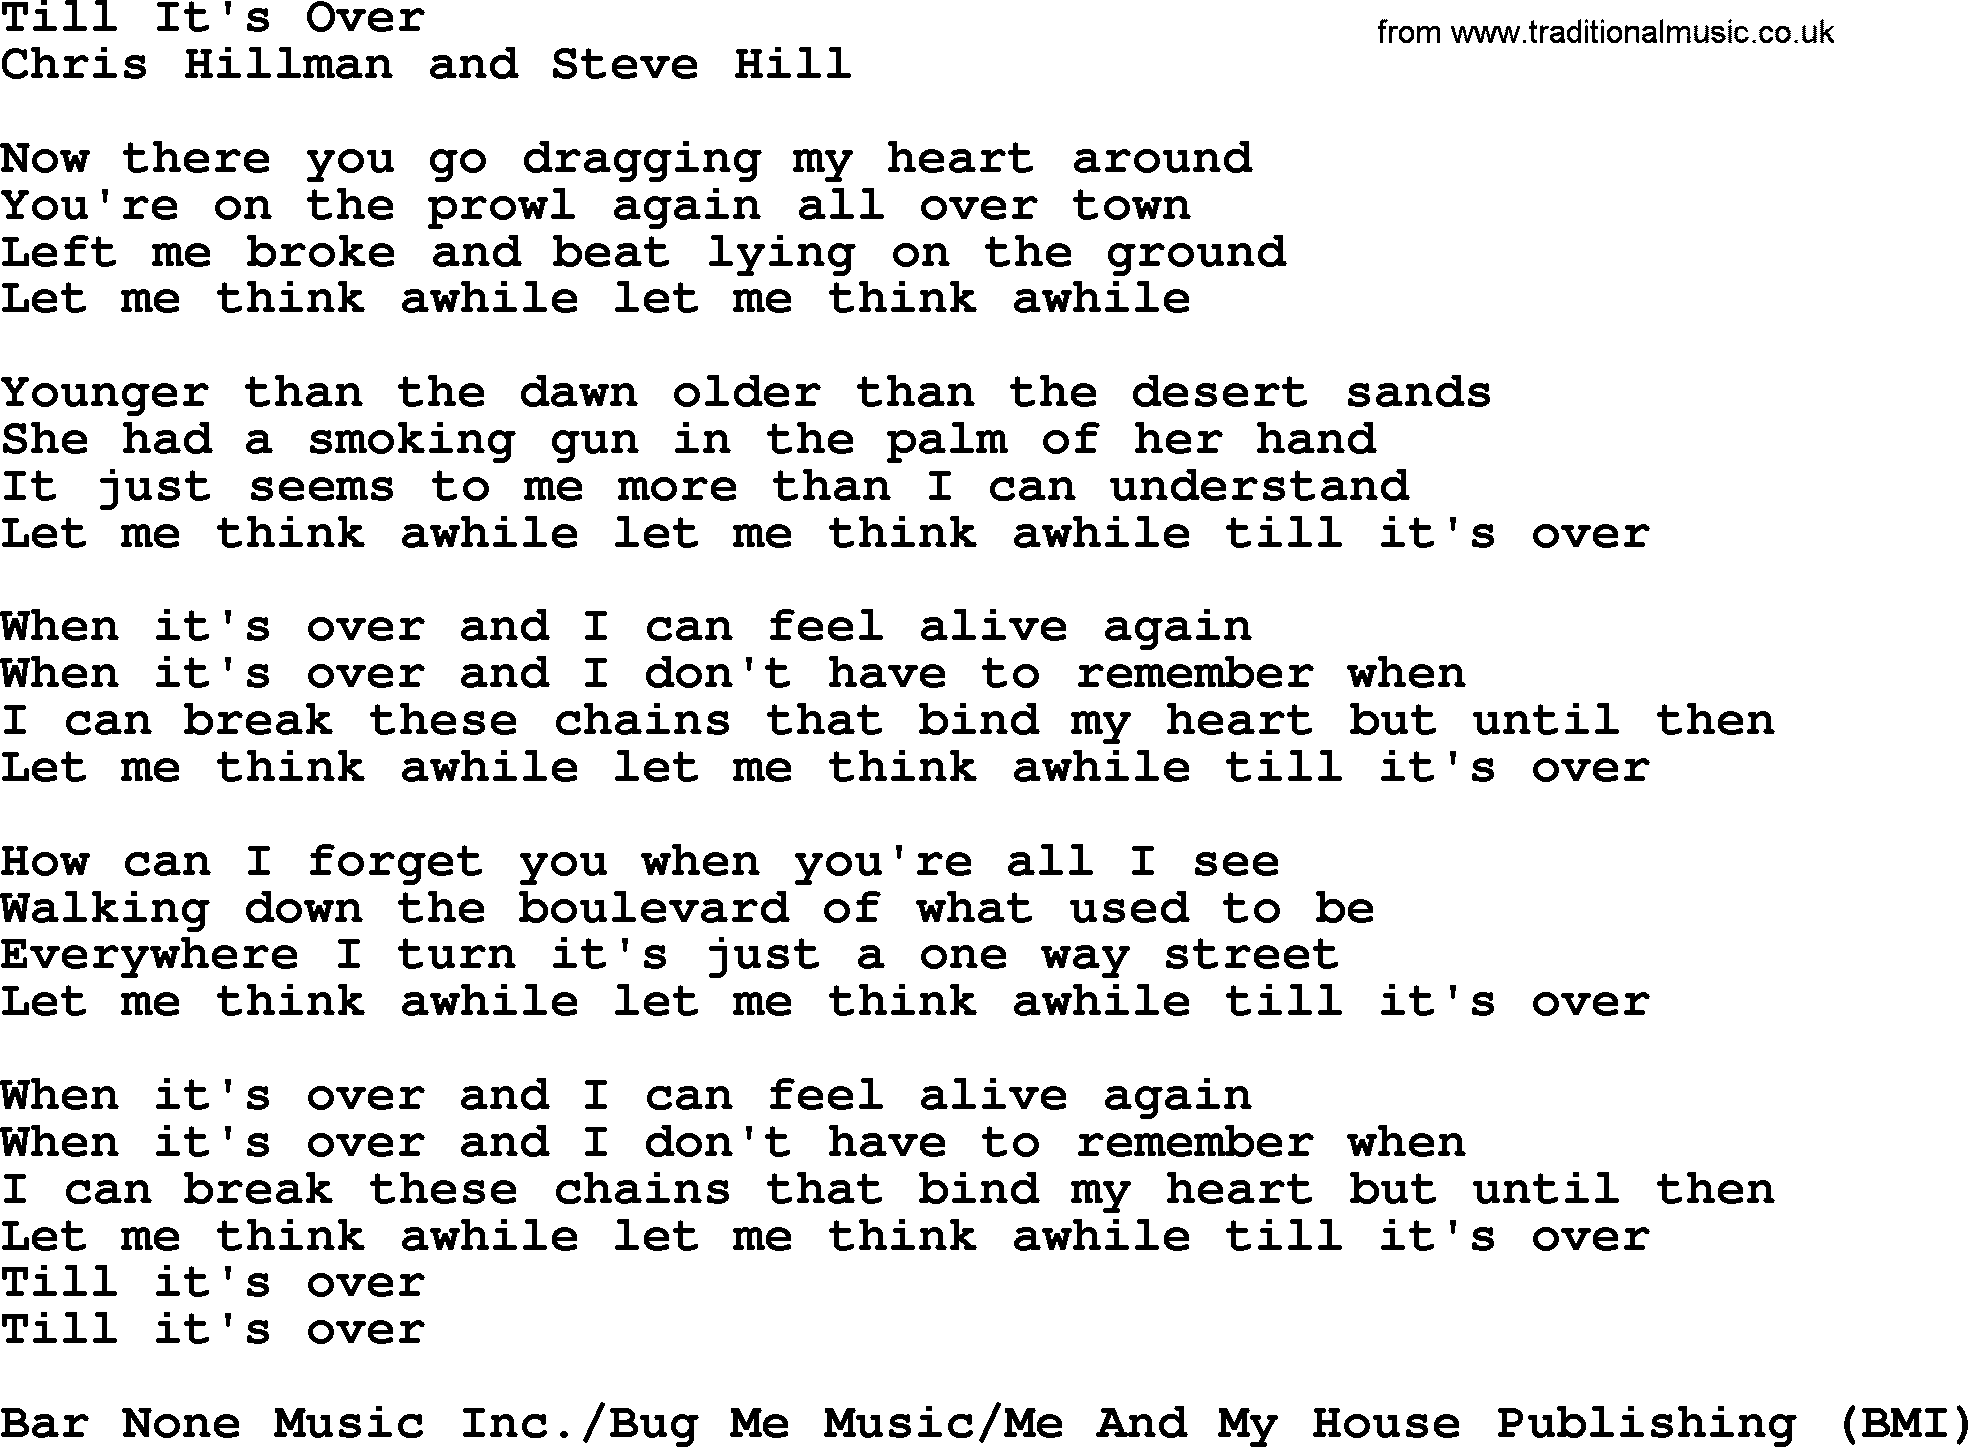 The Byrds song Till It's Over, lyrics